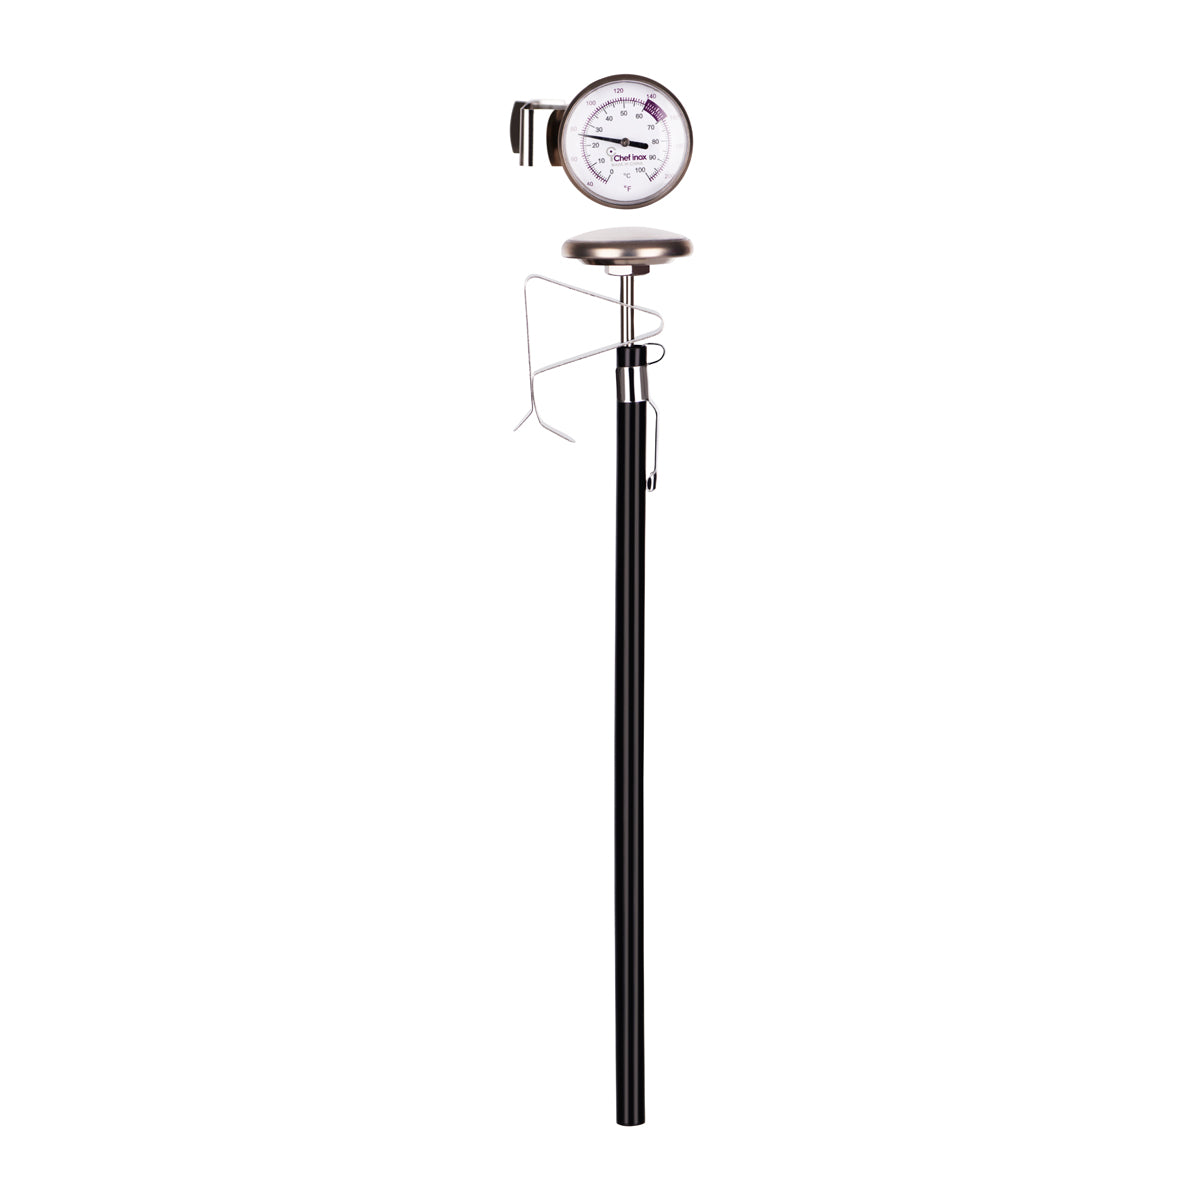 Chef Inox Thermometer Digital Pocket 55x135mm